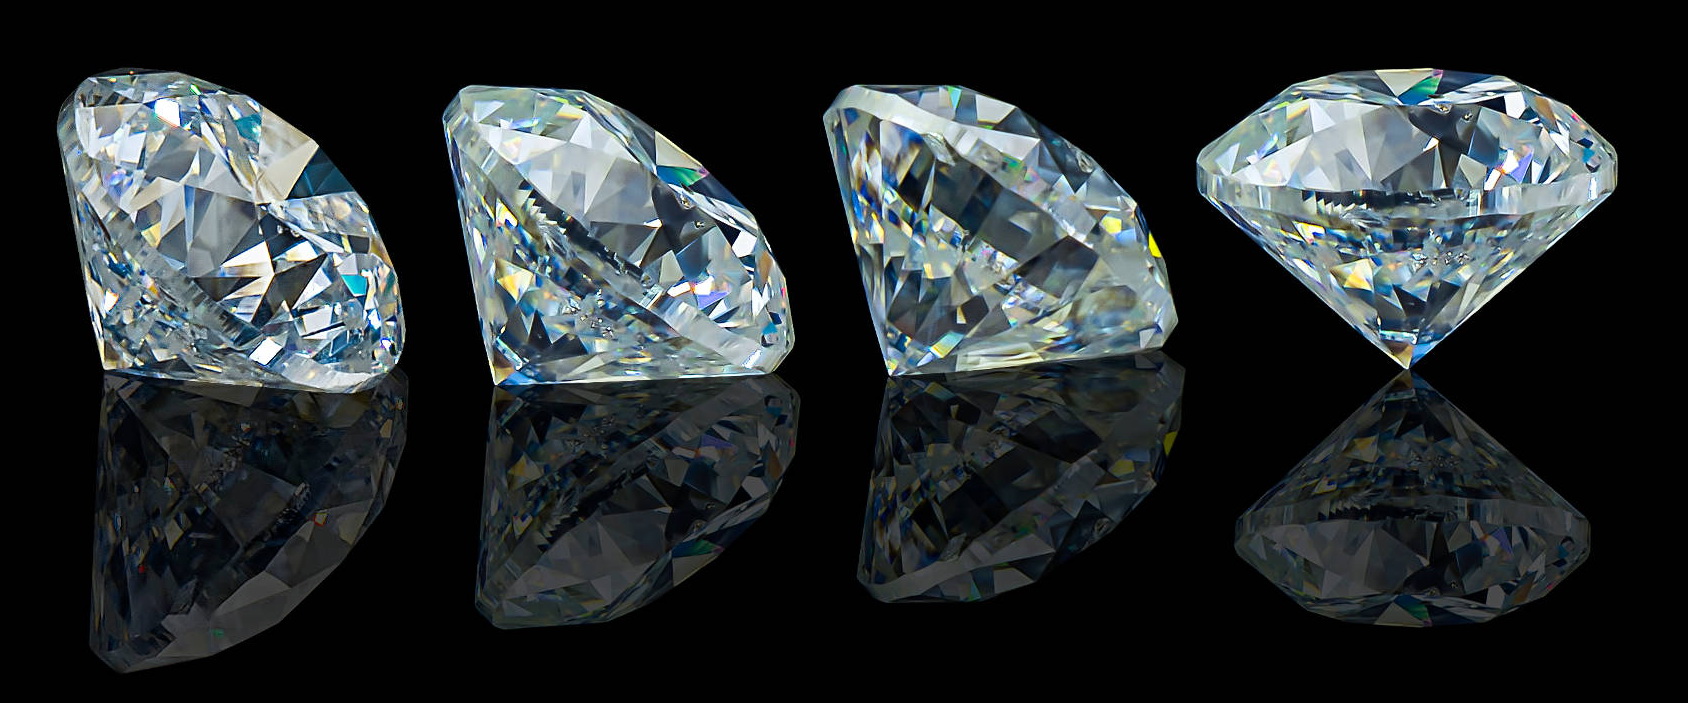 Саха Алмаз якутские бриллианты